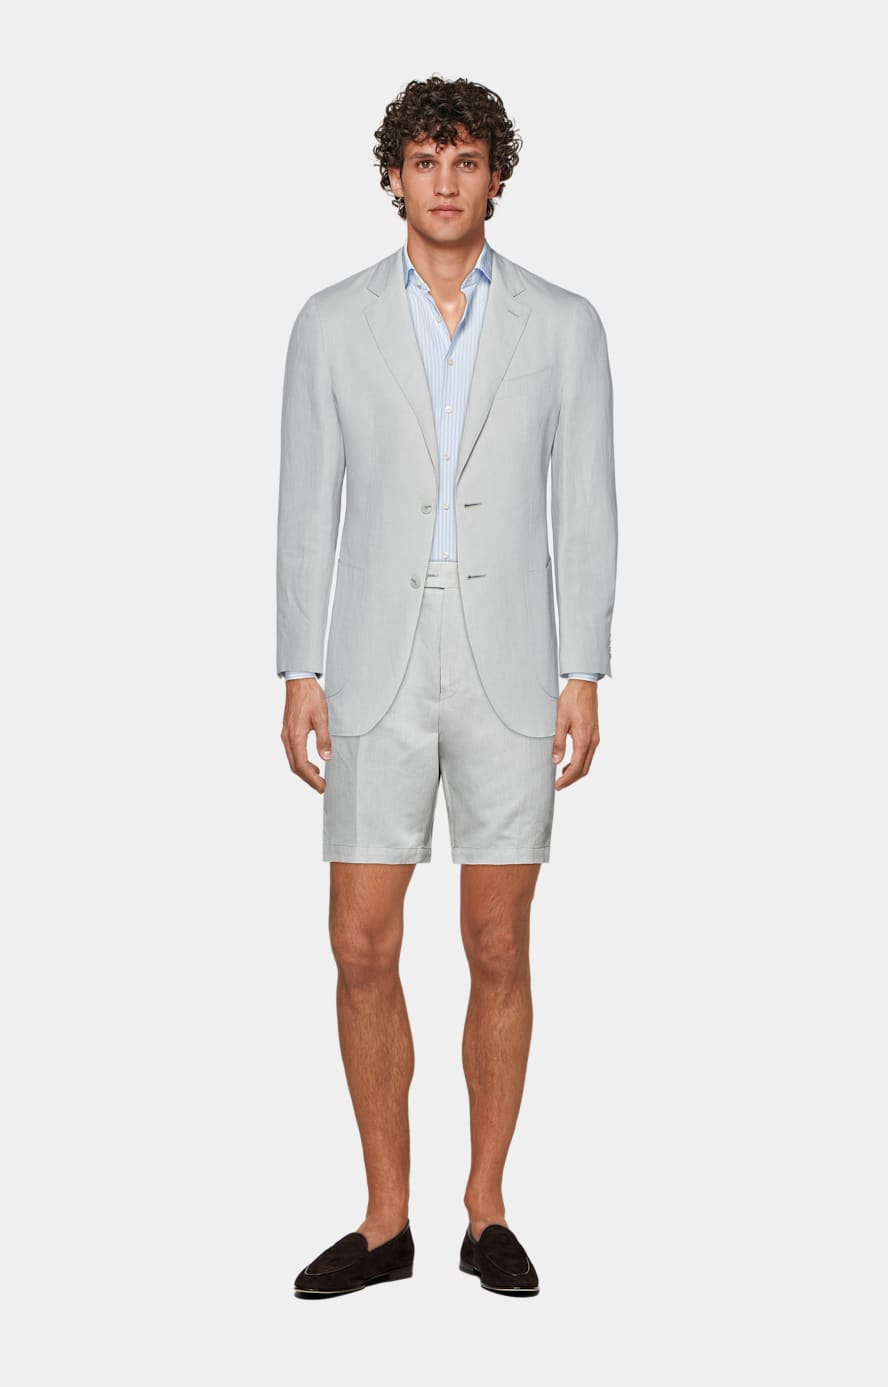 Pantalones cortos Firenze gris claro plisados